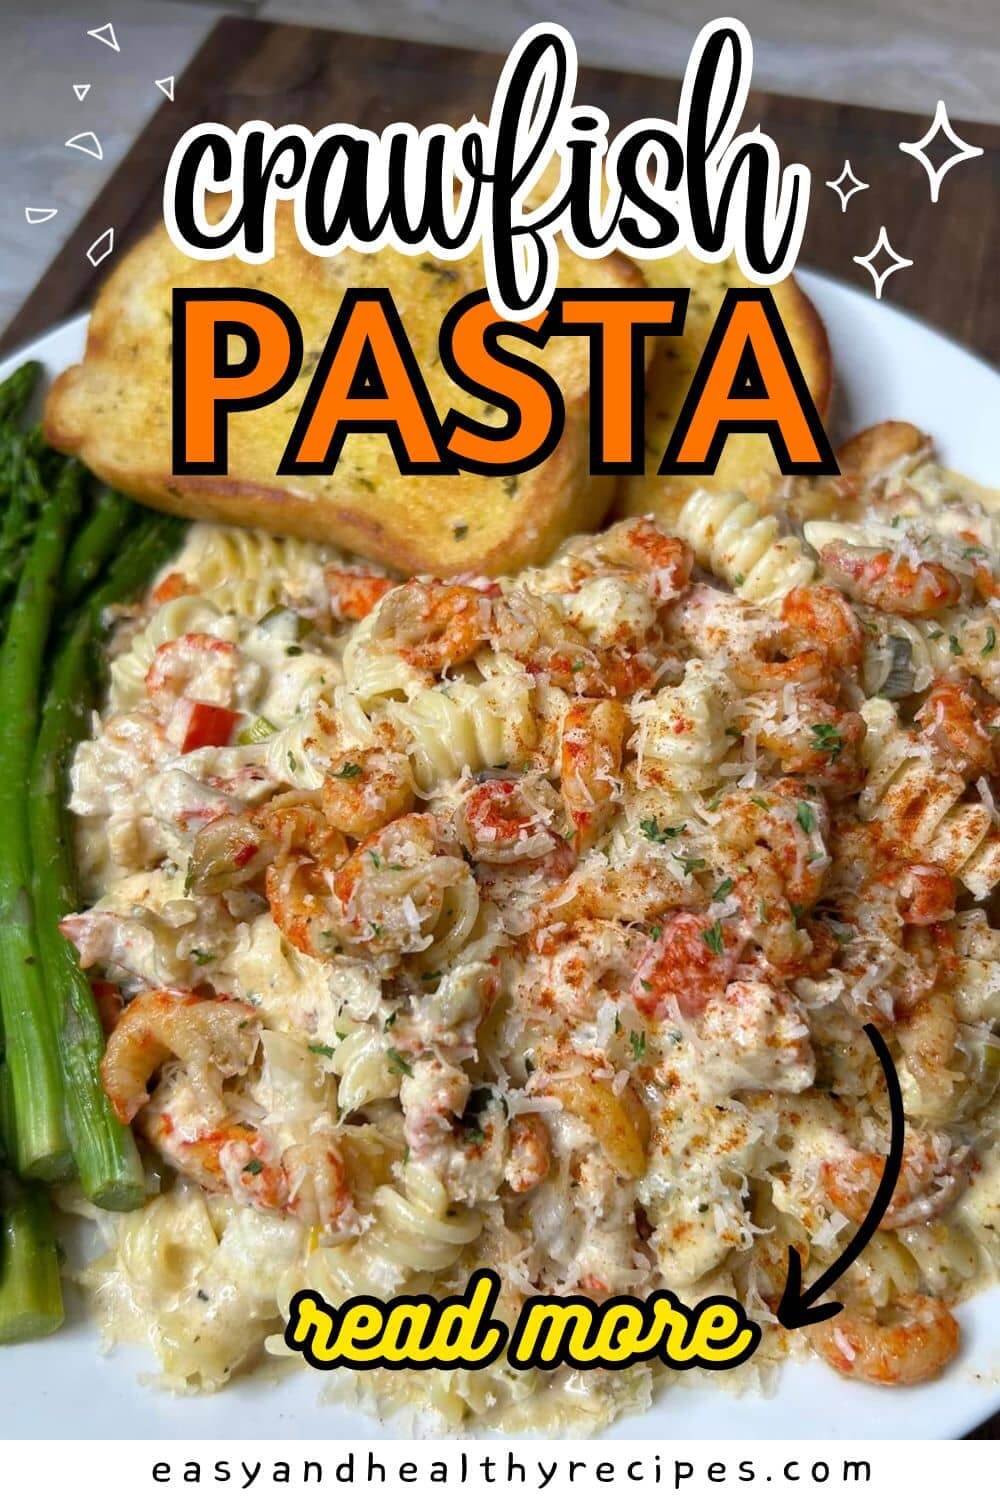 Crawfish Pasta